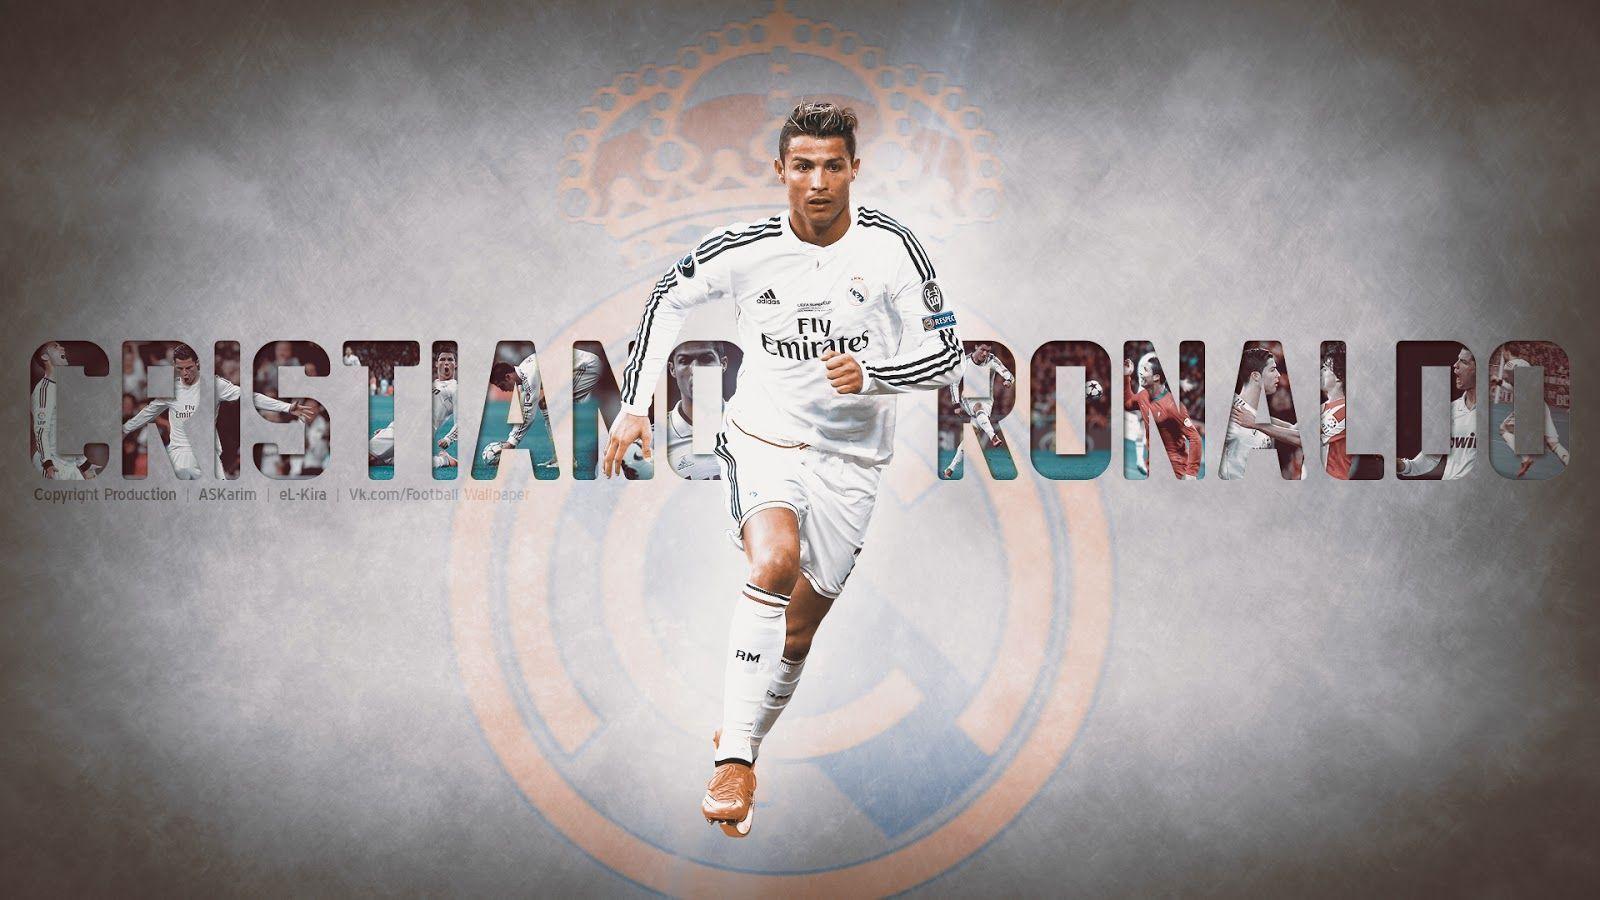 Koleksi Foto Cristiano Ronaldo Terbaru 2015 Terbaru 2015